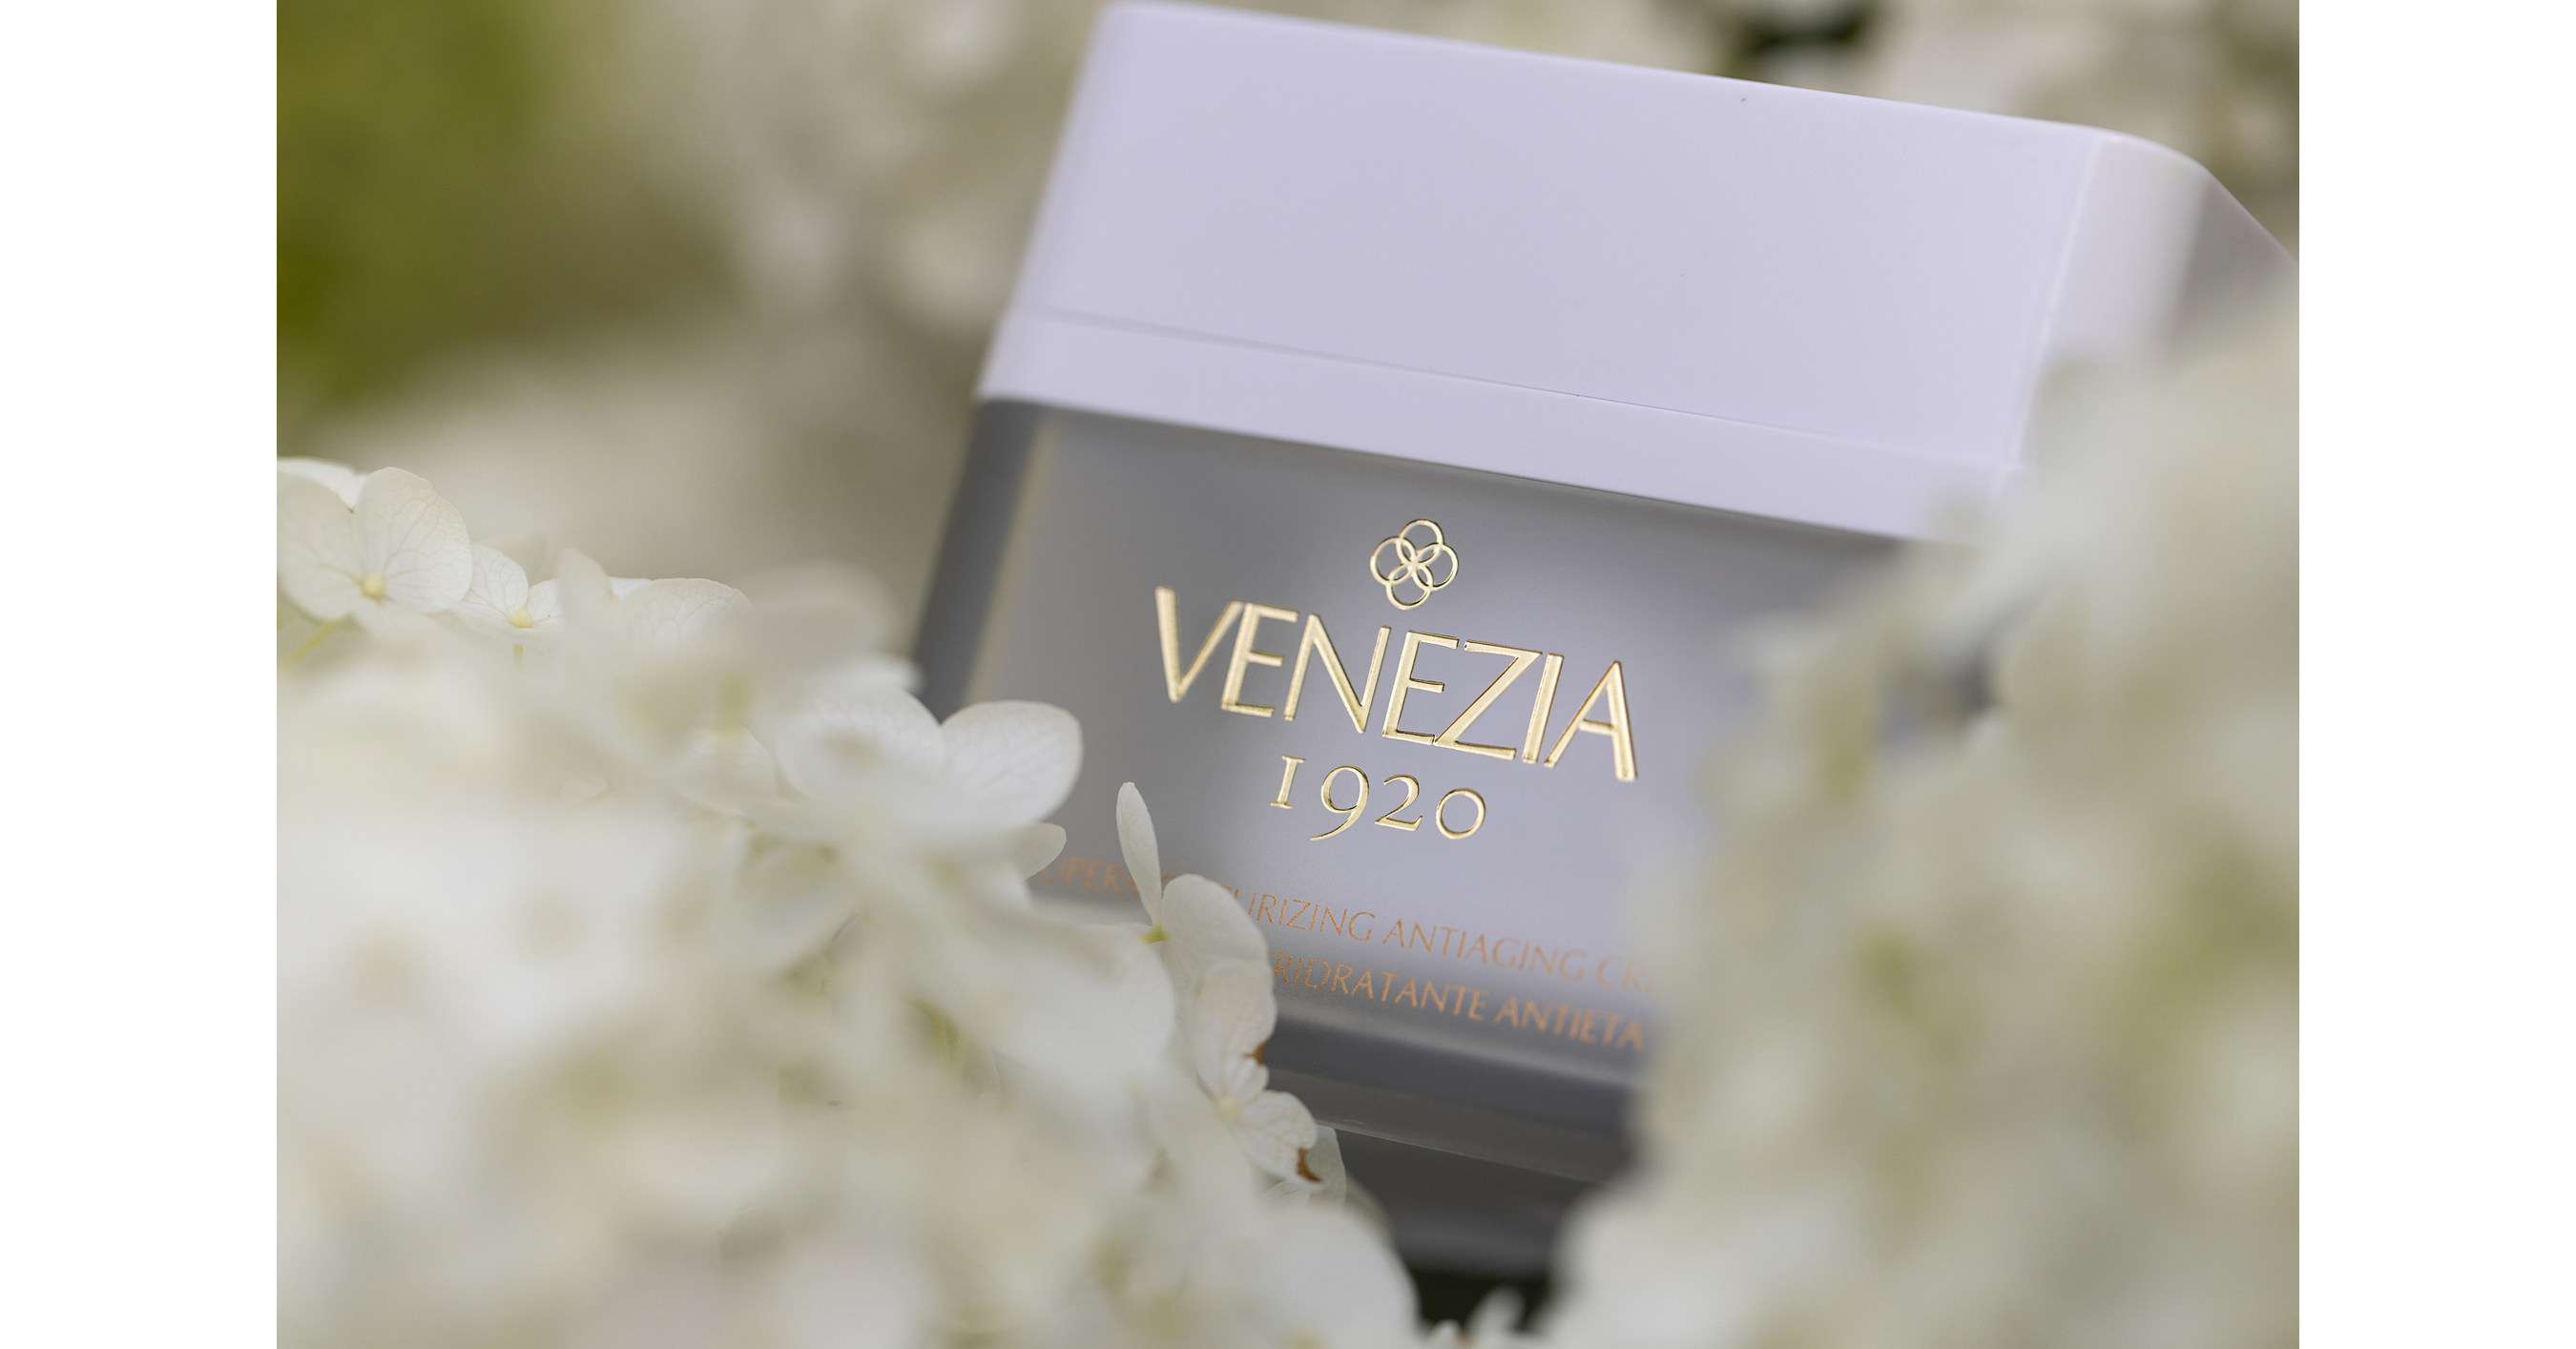 OneLavi.com Now Offers Venezia 1920’s Plant-Based Skincare Products